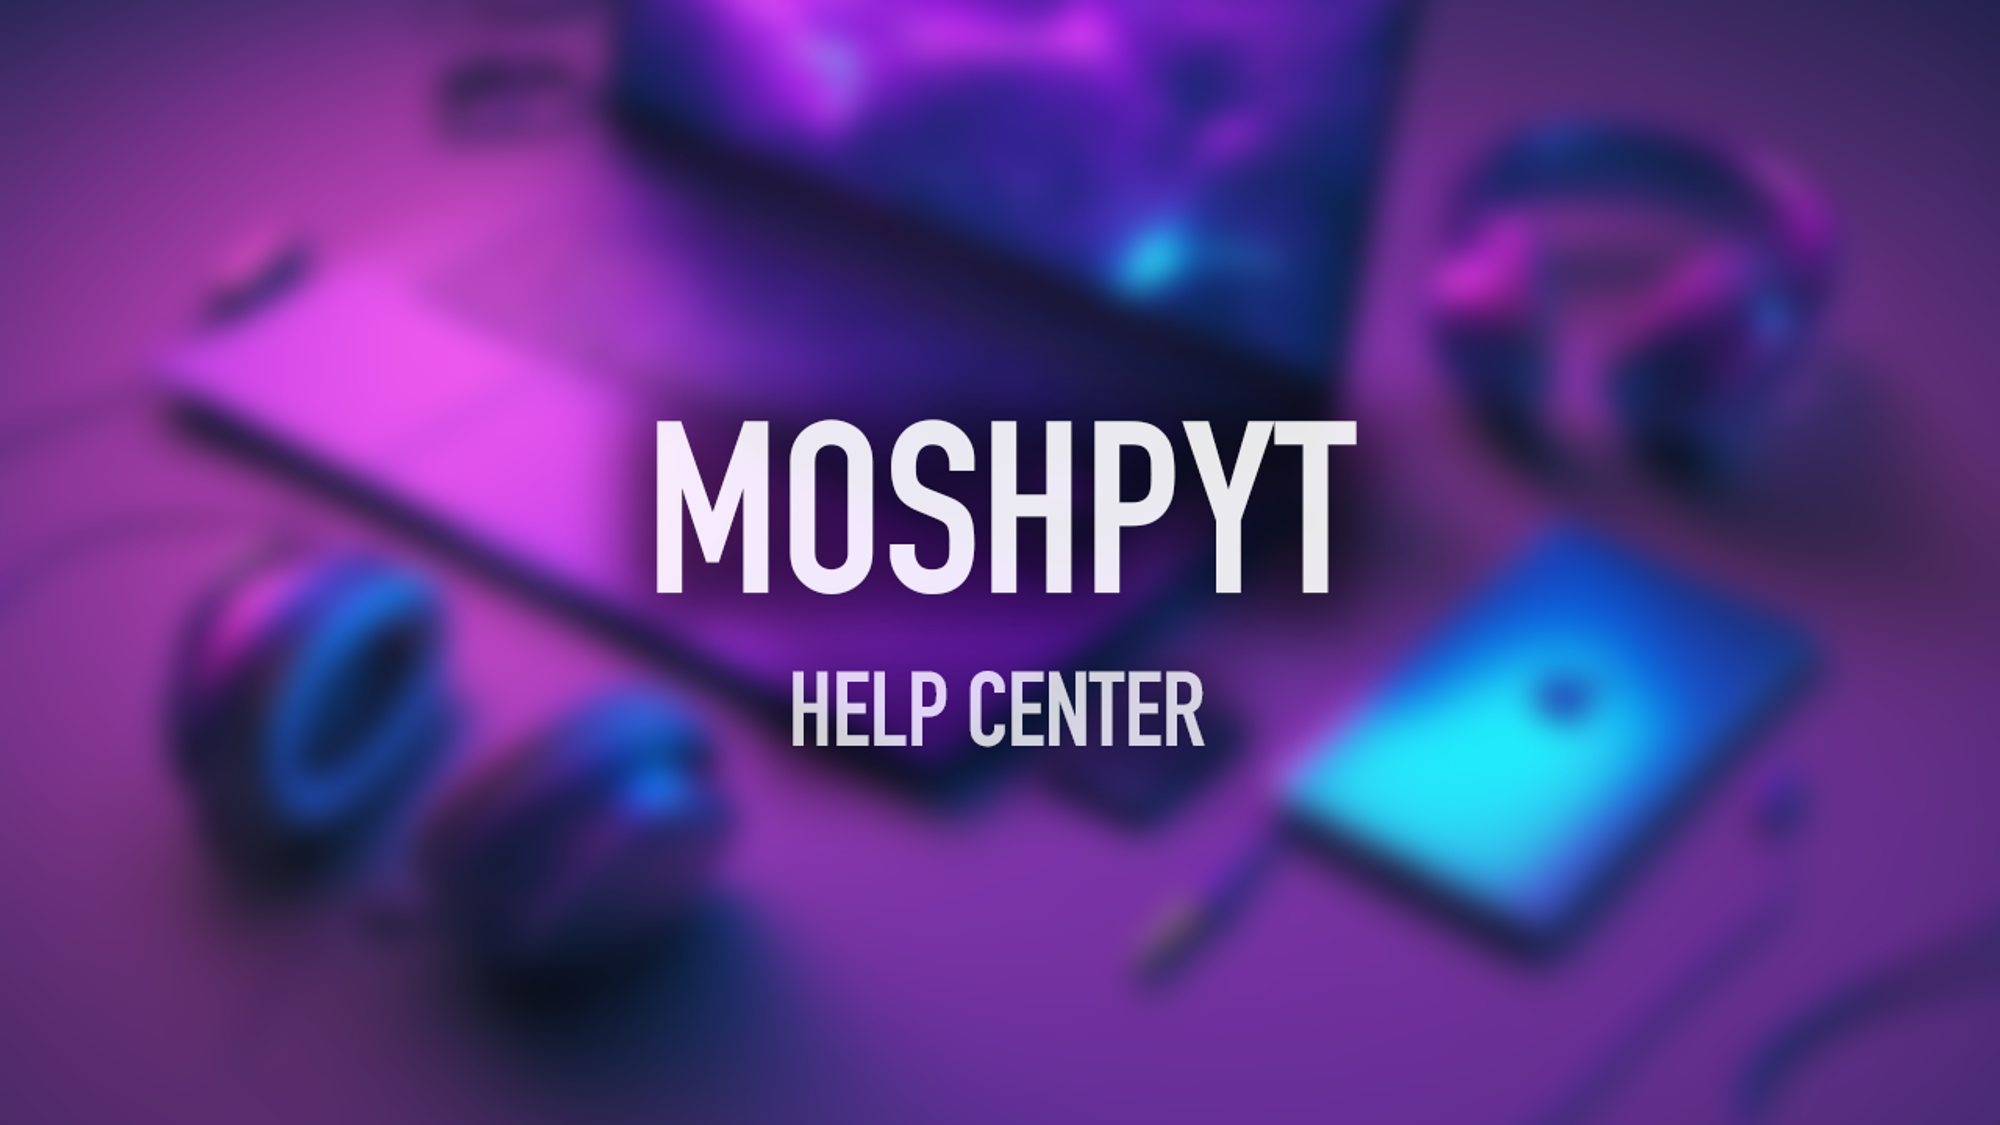 How do I Customize my Moshpyt Profile?